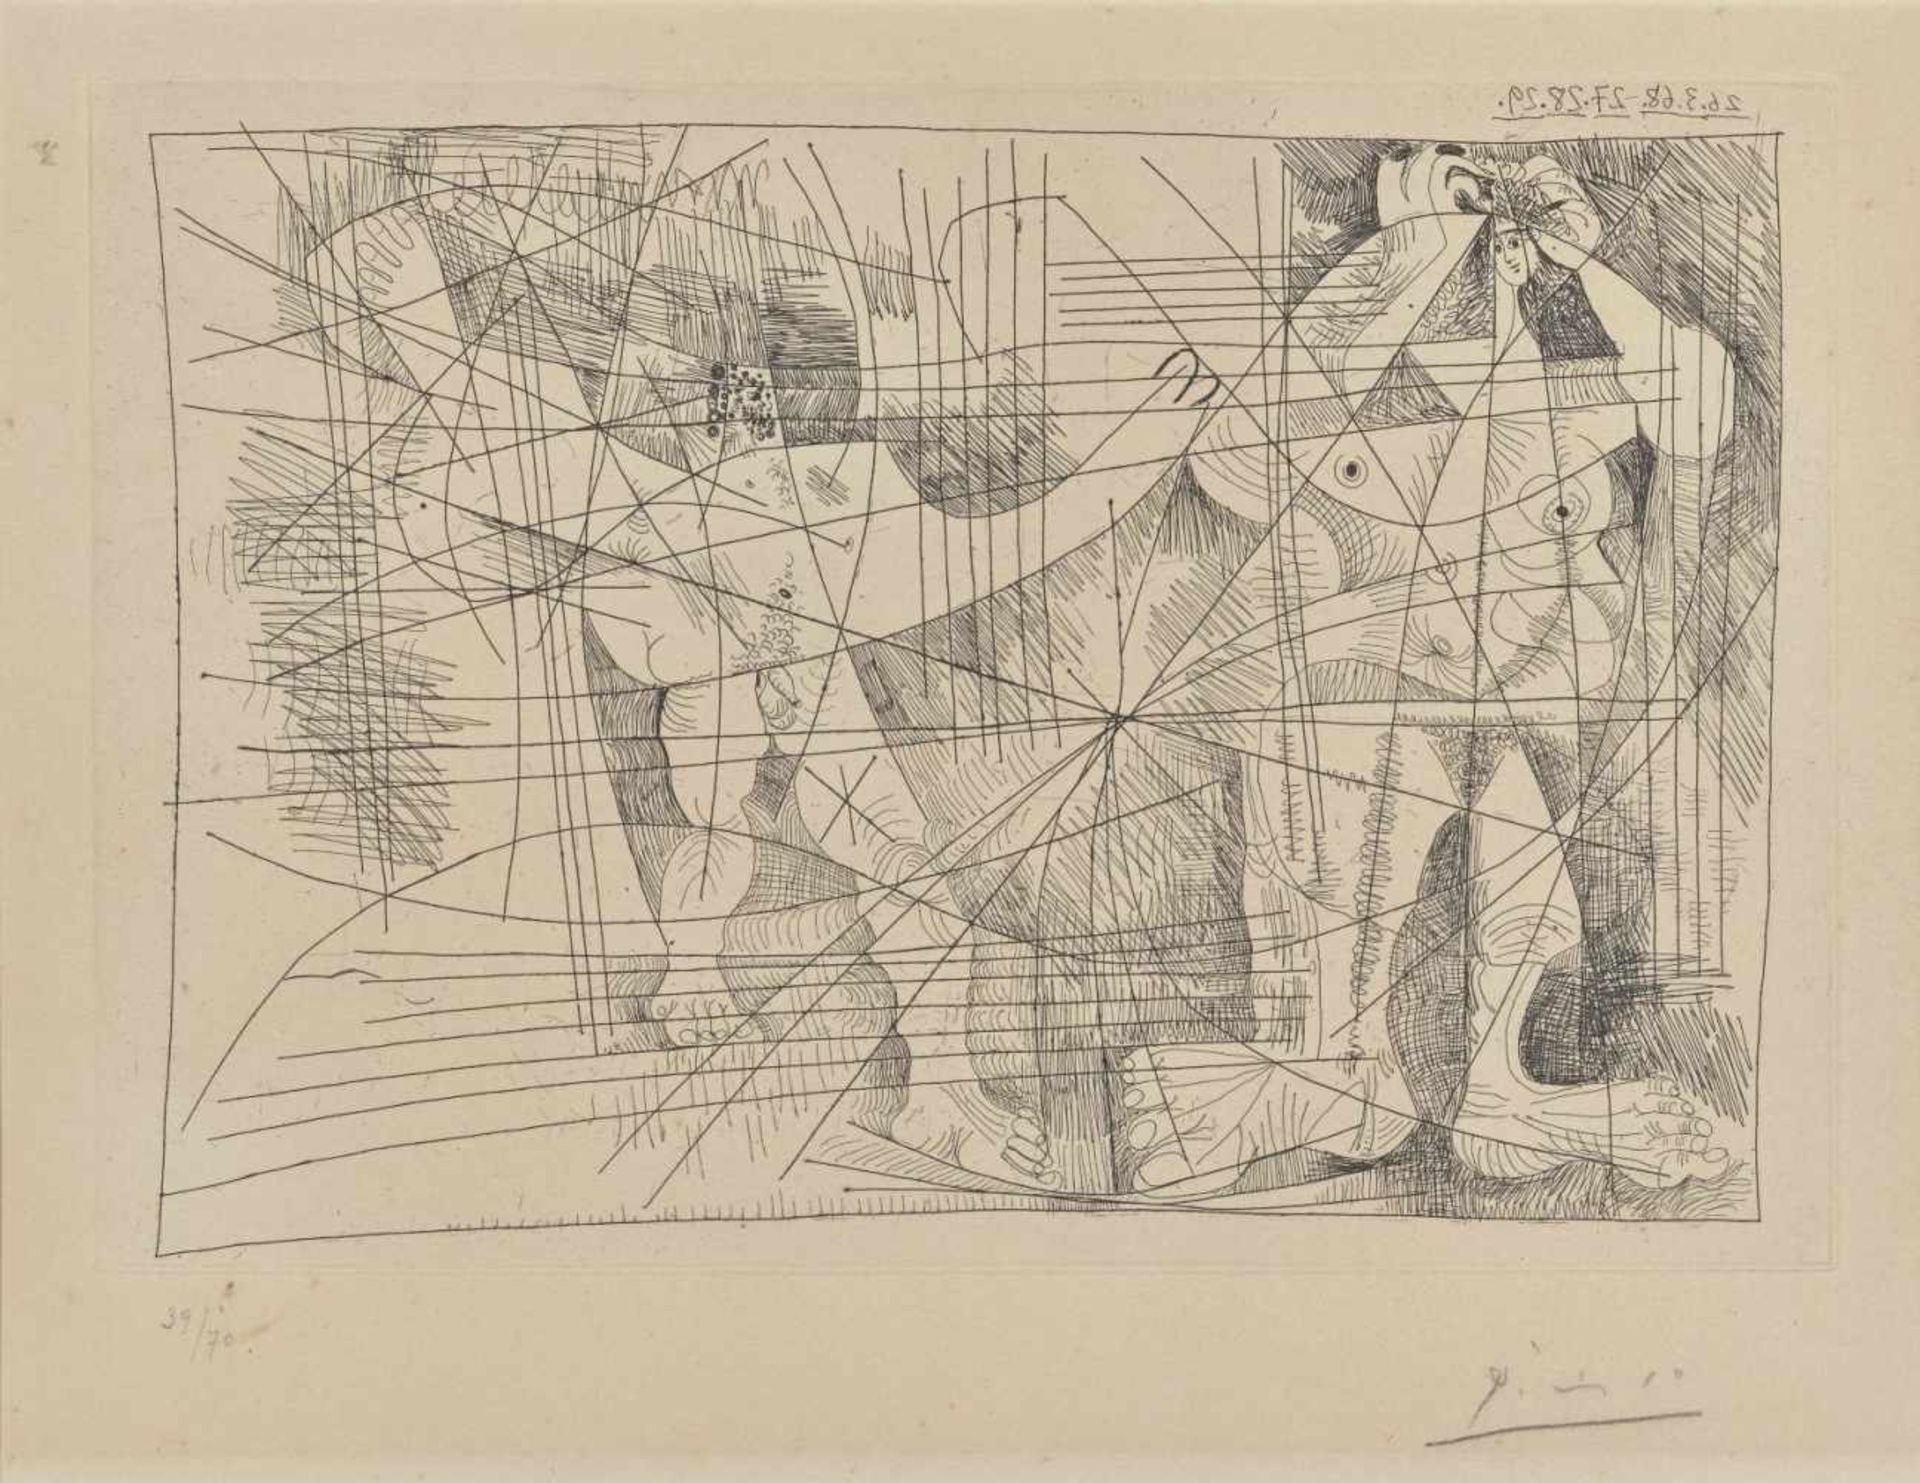 Picasso, Pablo1881 Malaga - 1973 MouginsLa Magie Quotidienne. 1968 Radierung auf Velin (Wz. LB) 22 x